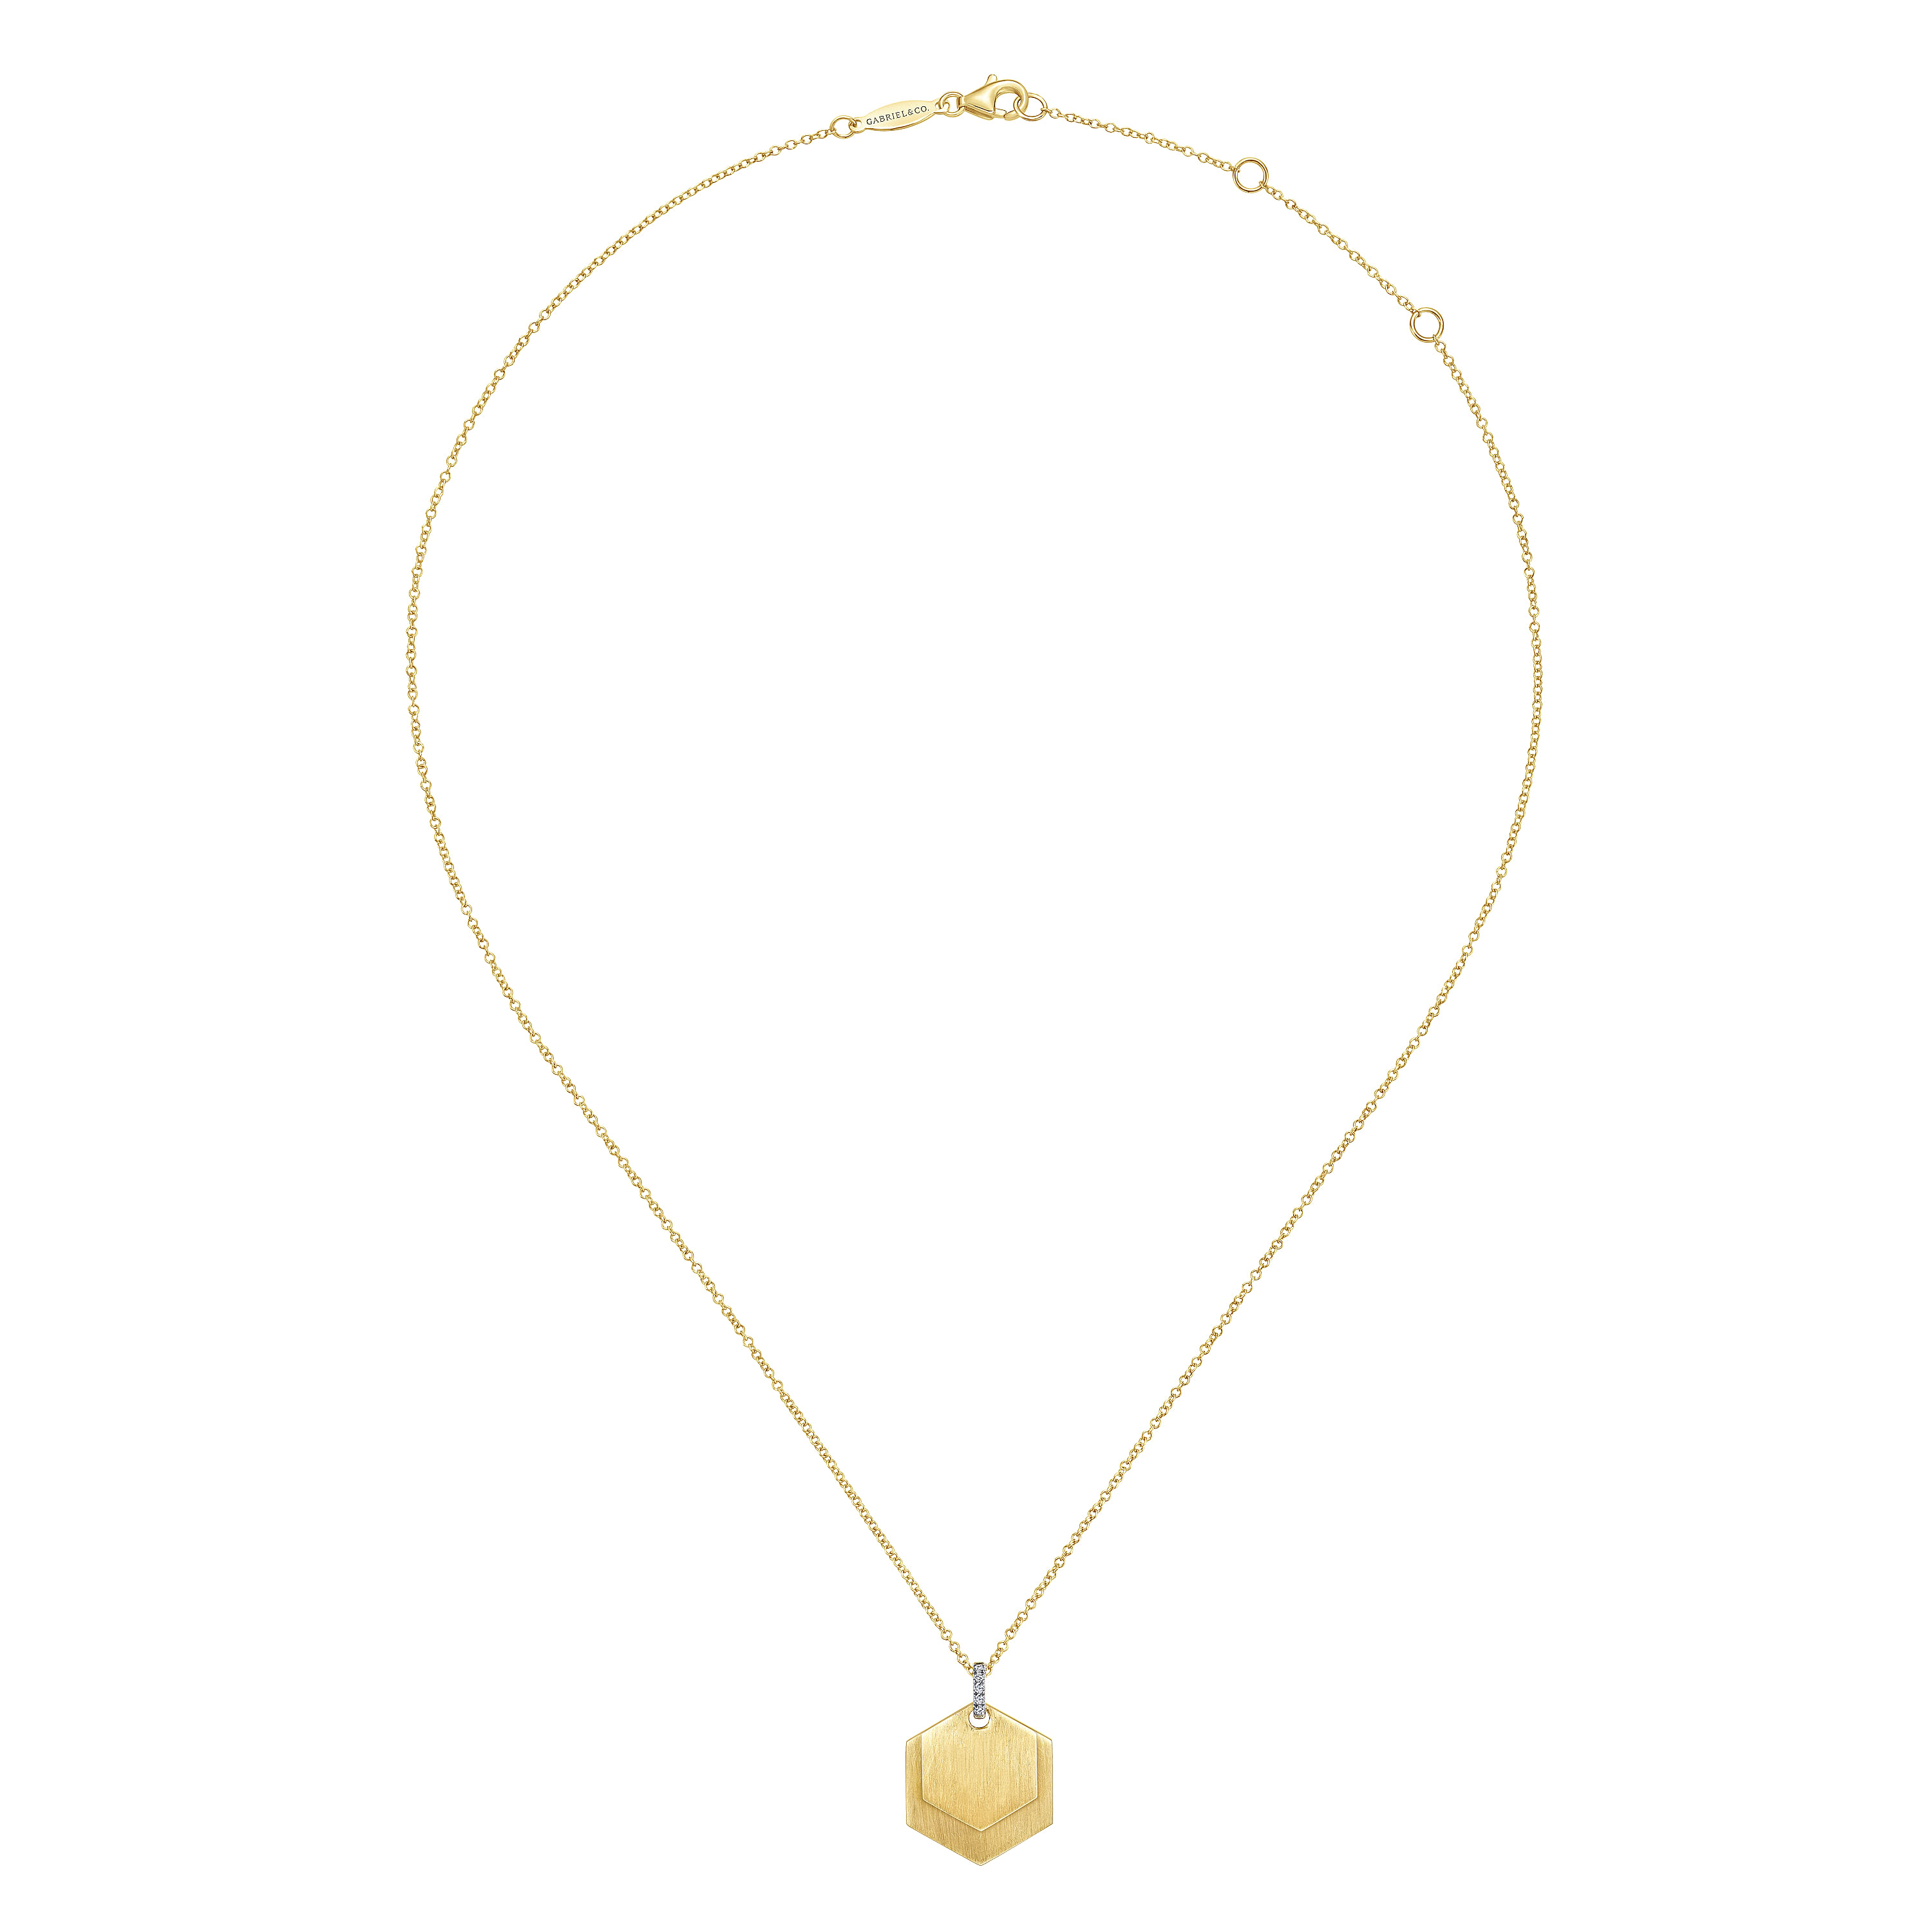 14K Yellow Gold Layered Hexagonal Pendant Necklace with Diamond Bale